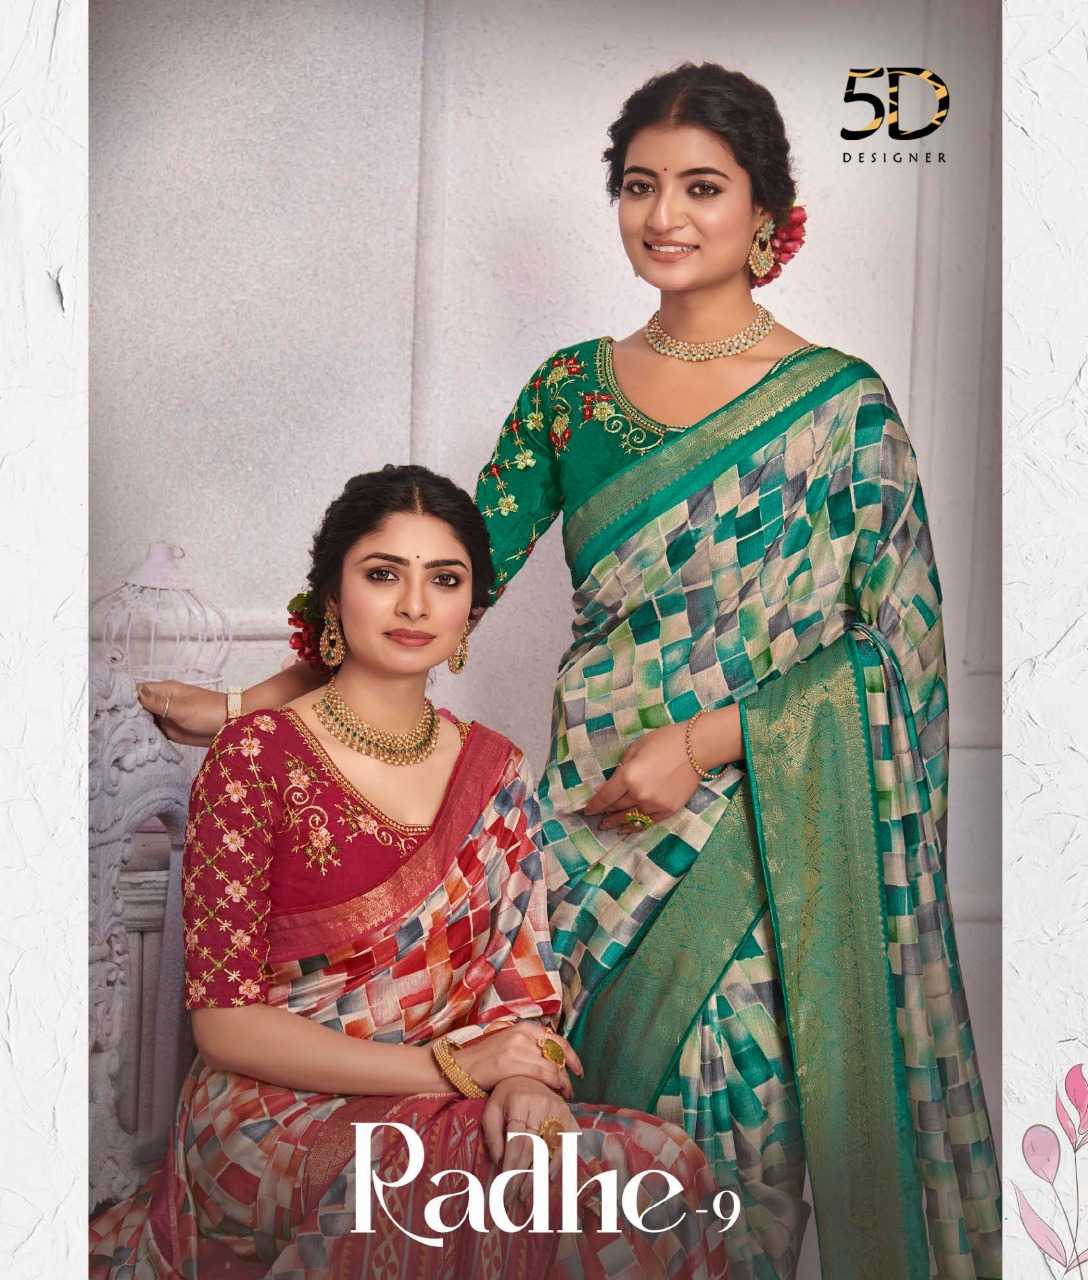 5d designer radhe vol 9 40071-40078 soft dola jacquard saree with fancy work blouse